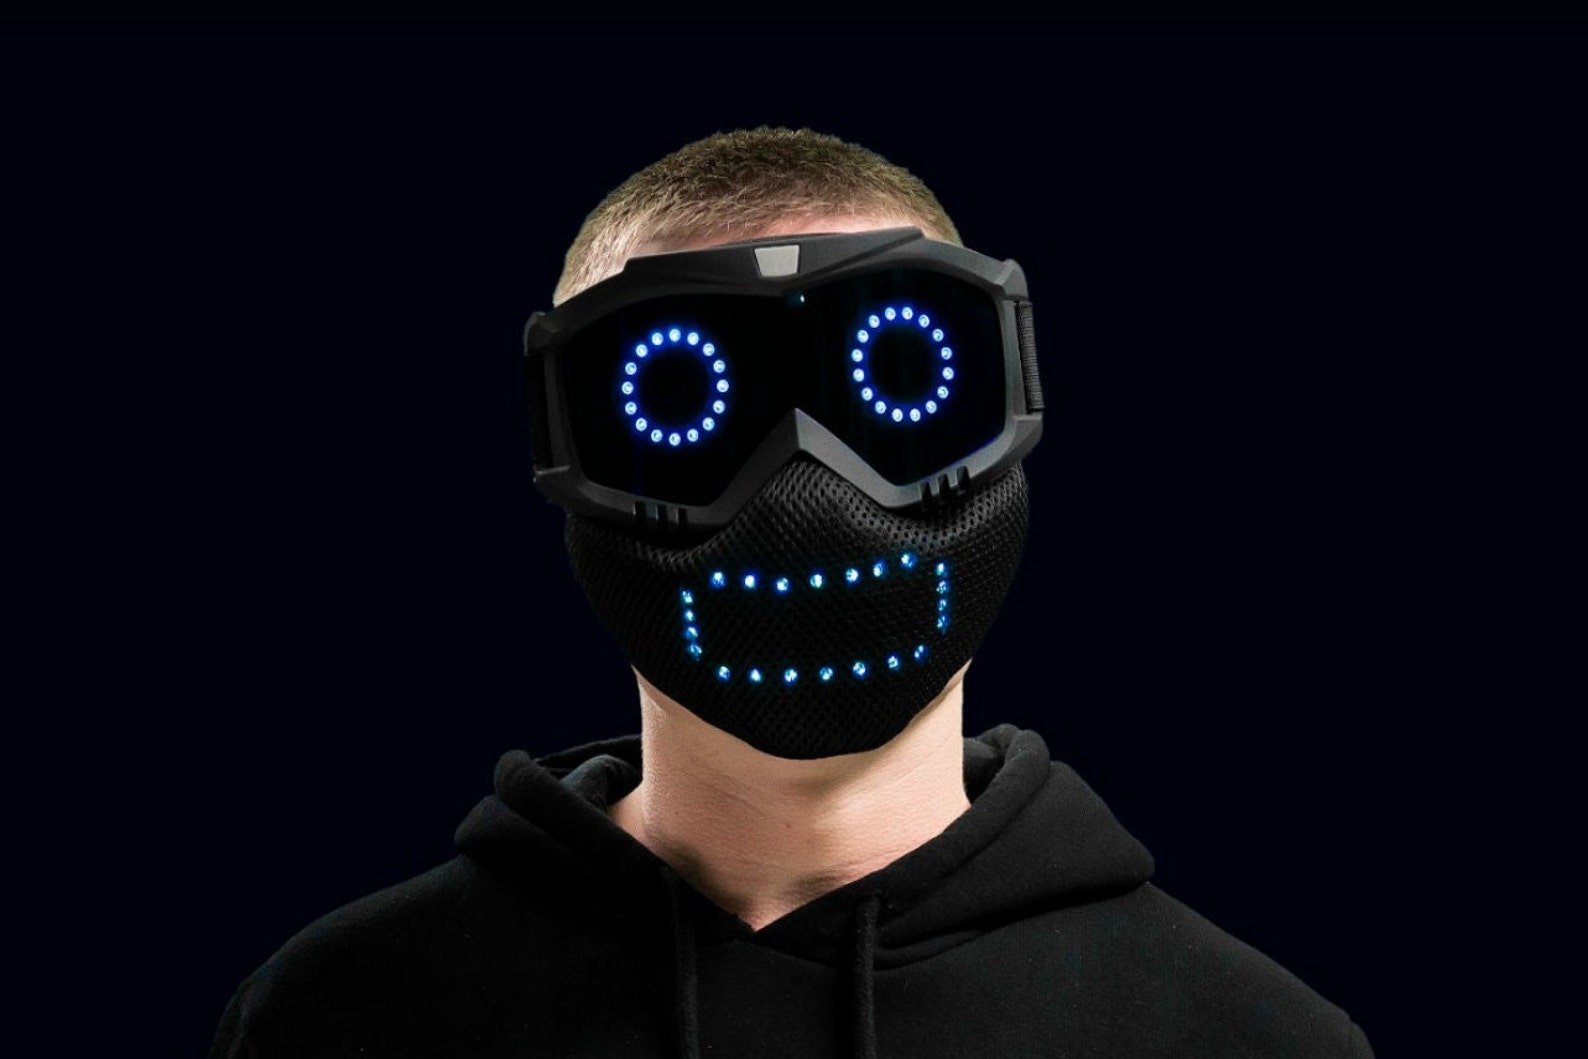 Qudi маска. Led маска. Маска со светодиодами. Электронная маска с эмоциями.